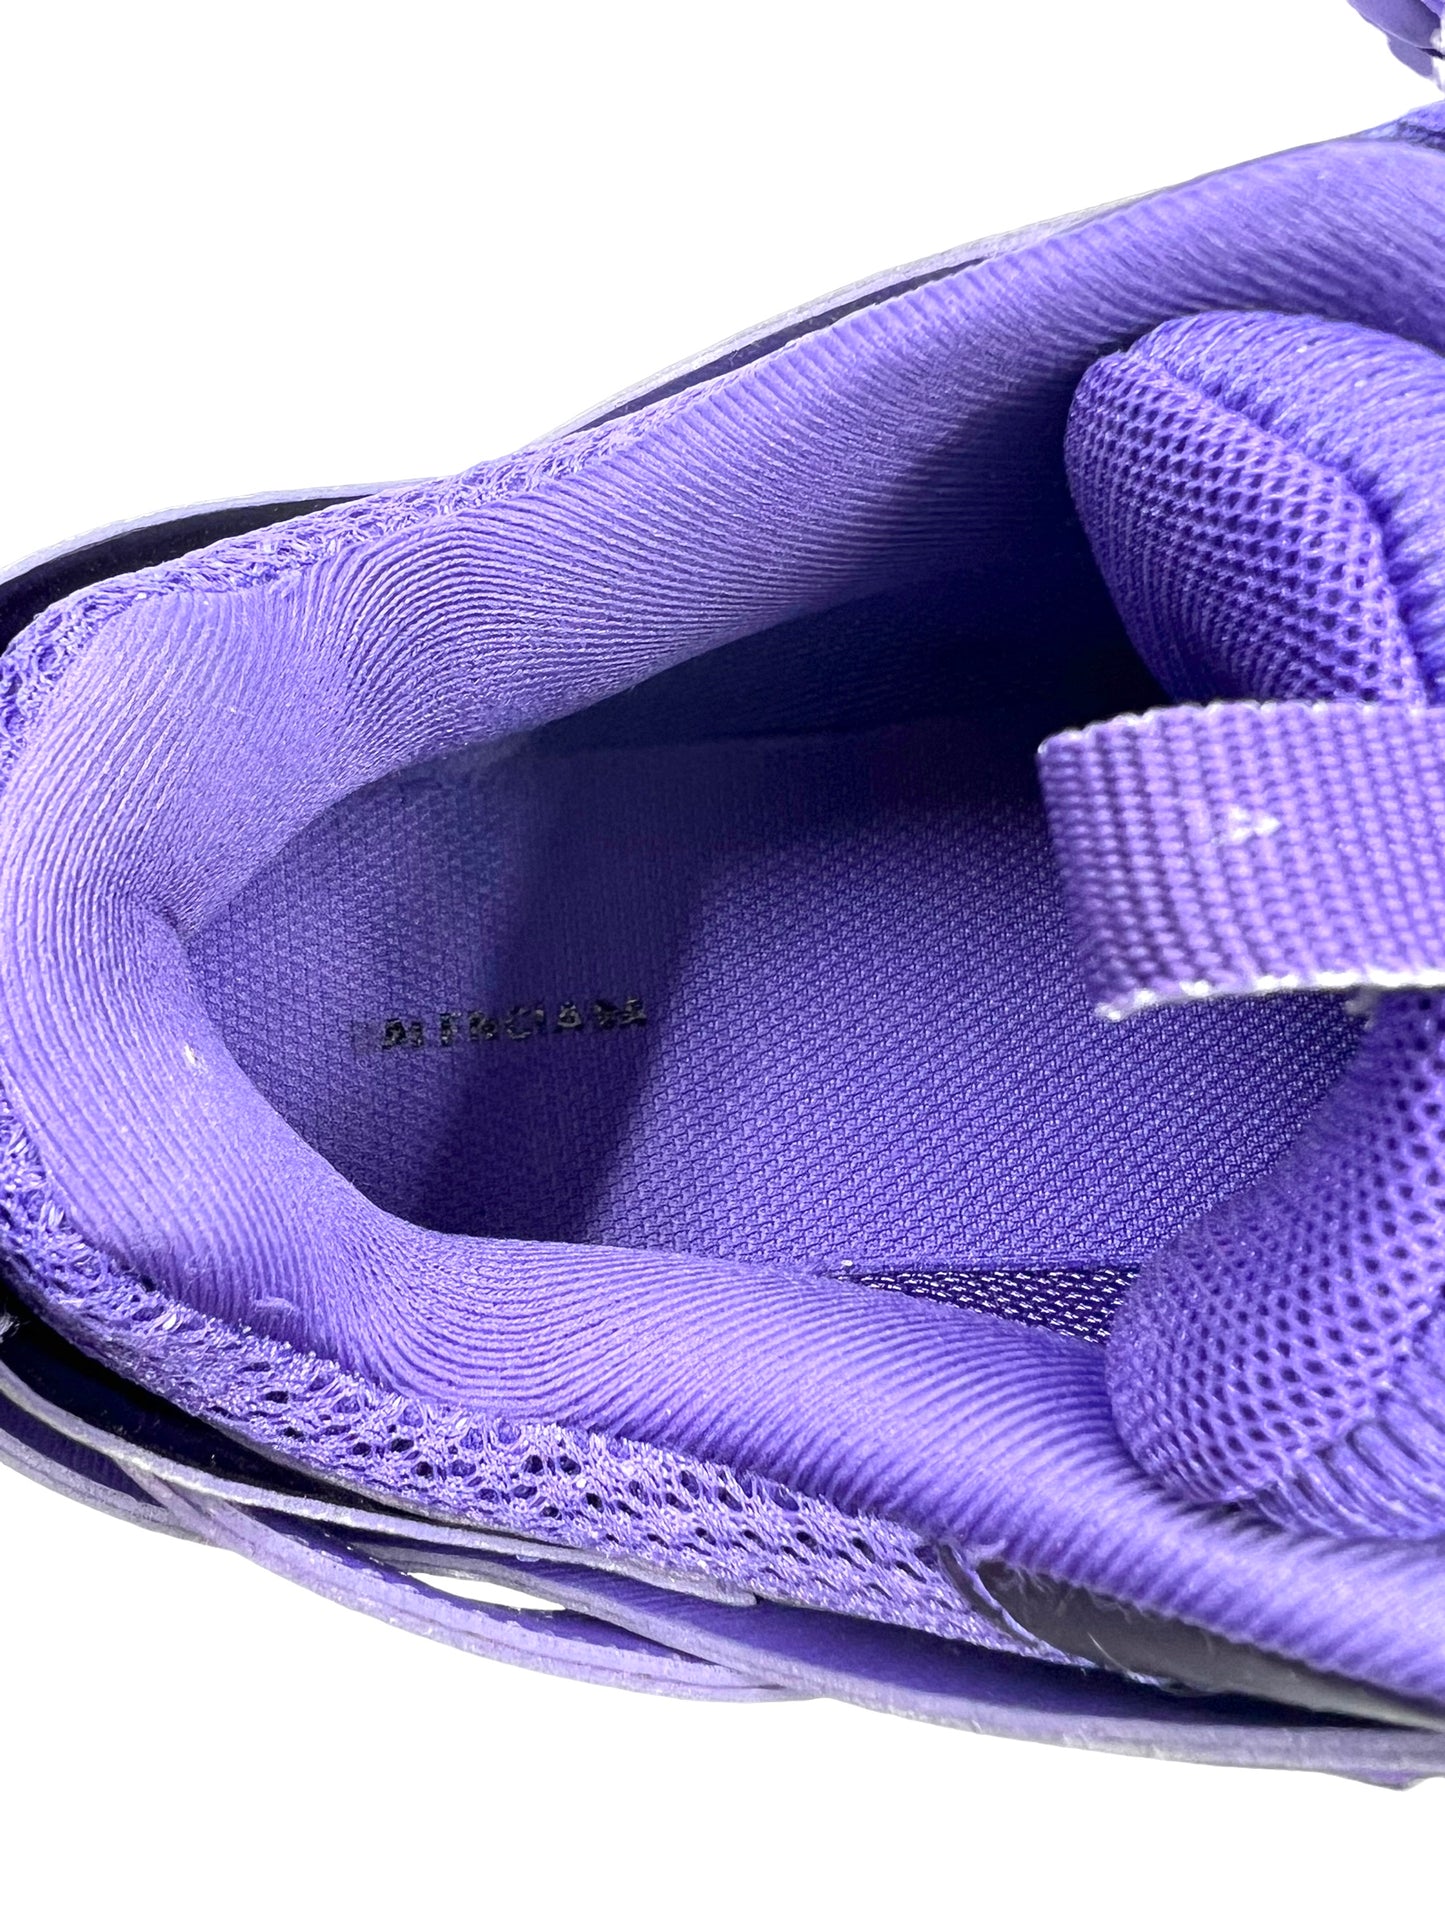 Balenciaga Size 41 Purple Leather Track Sneakers